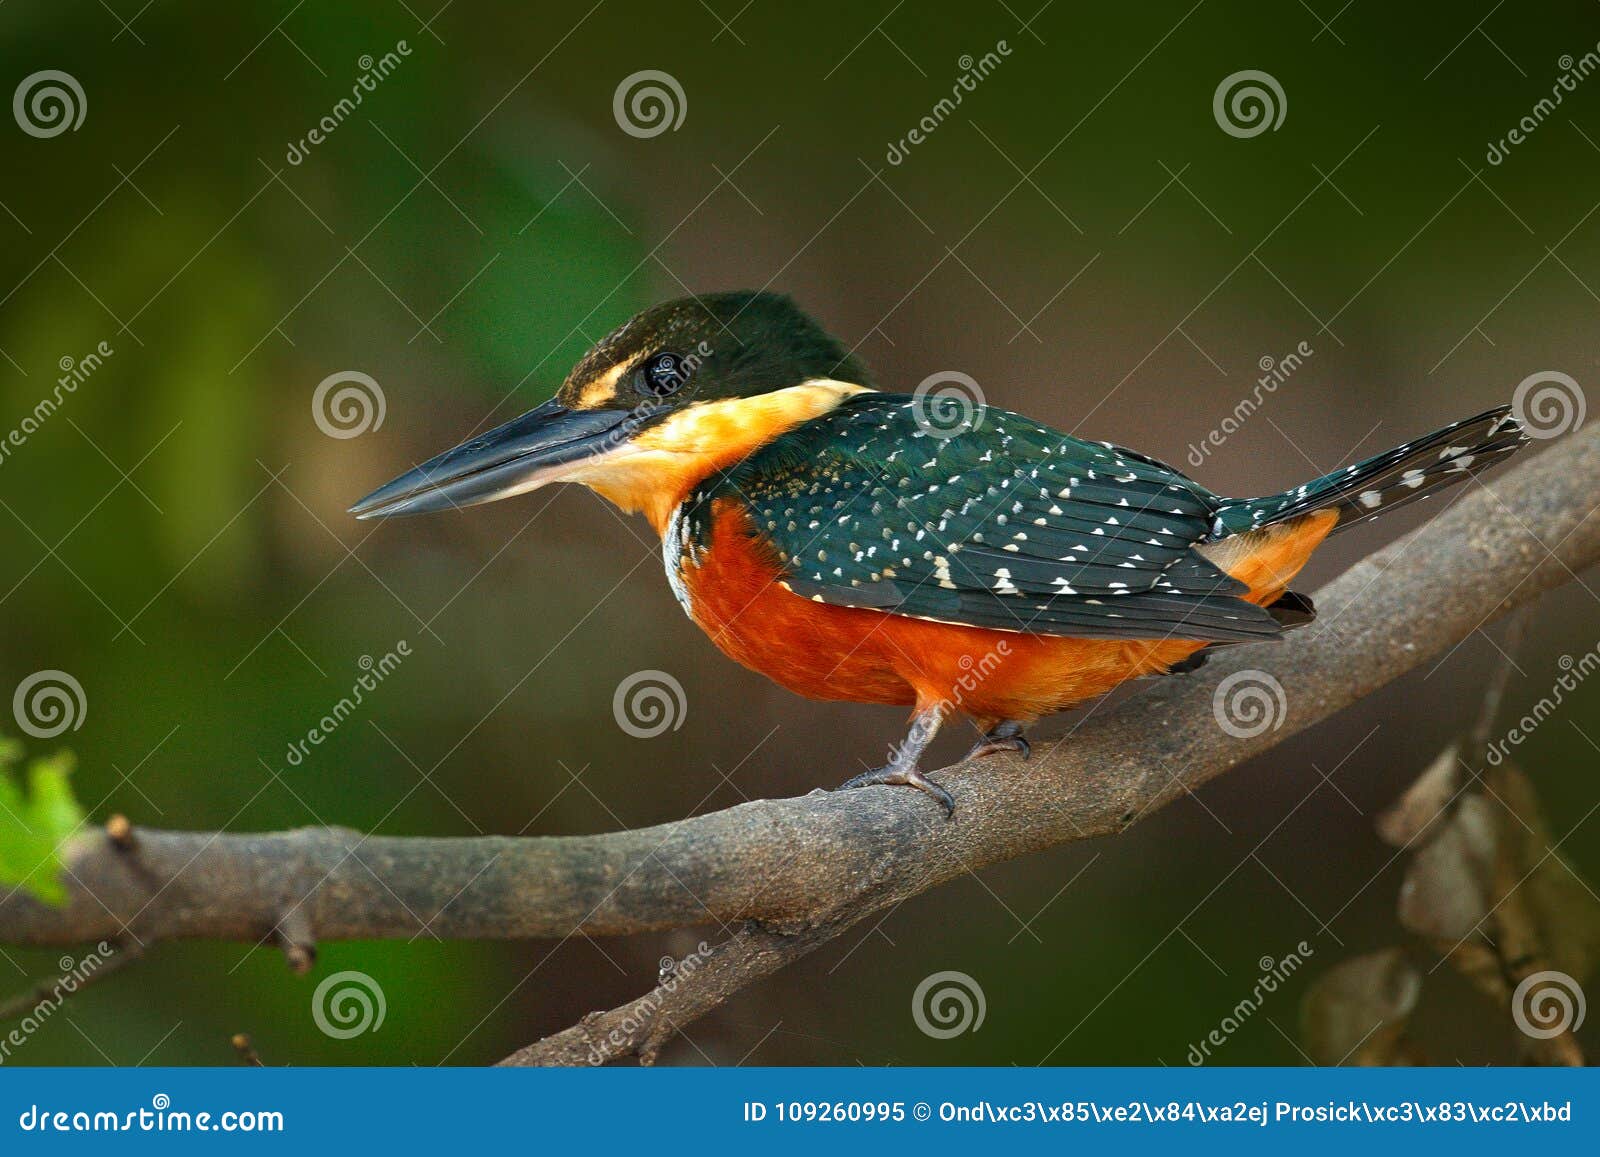 green-and-rufous kingfisher, chloroceryle inda, green and orange bird sitting on tree branch, bird in nature habitat, baranco alto